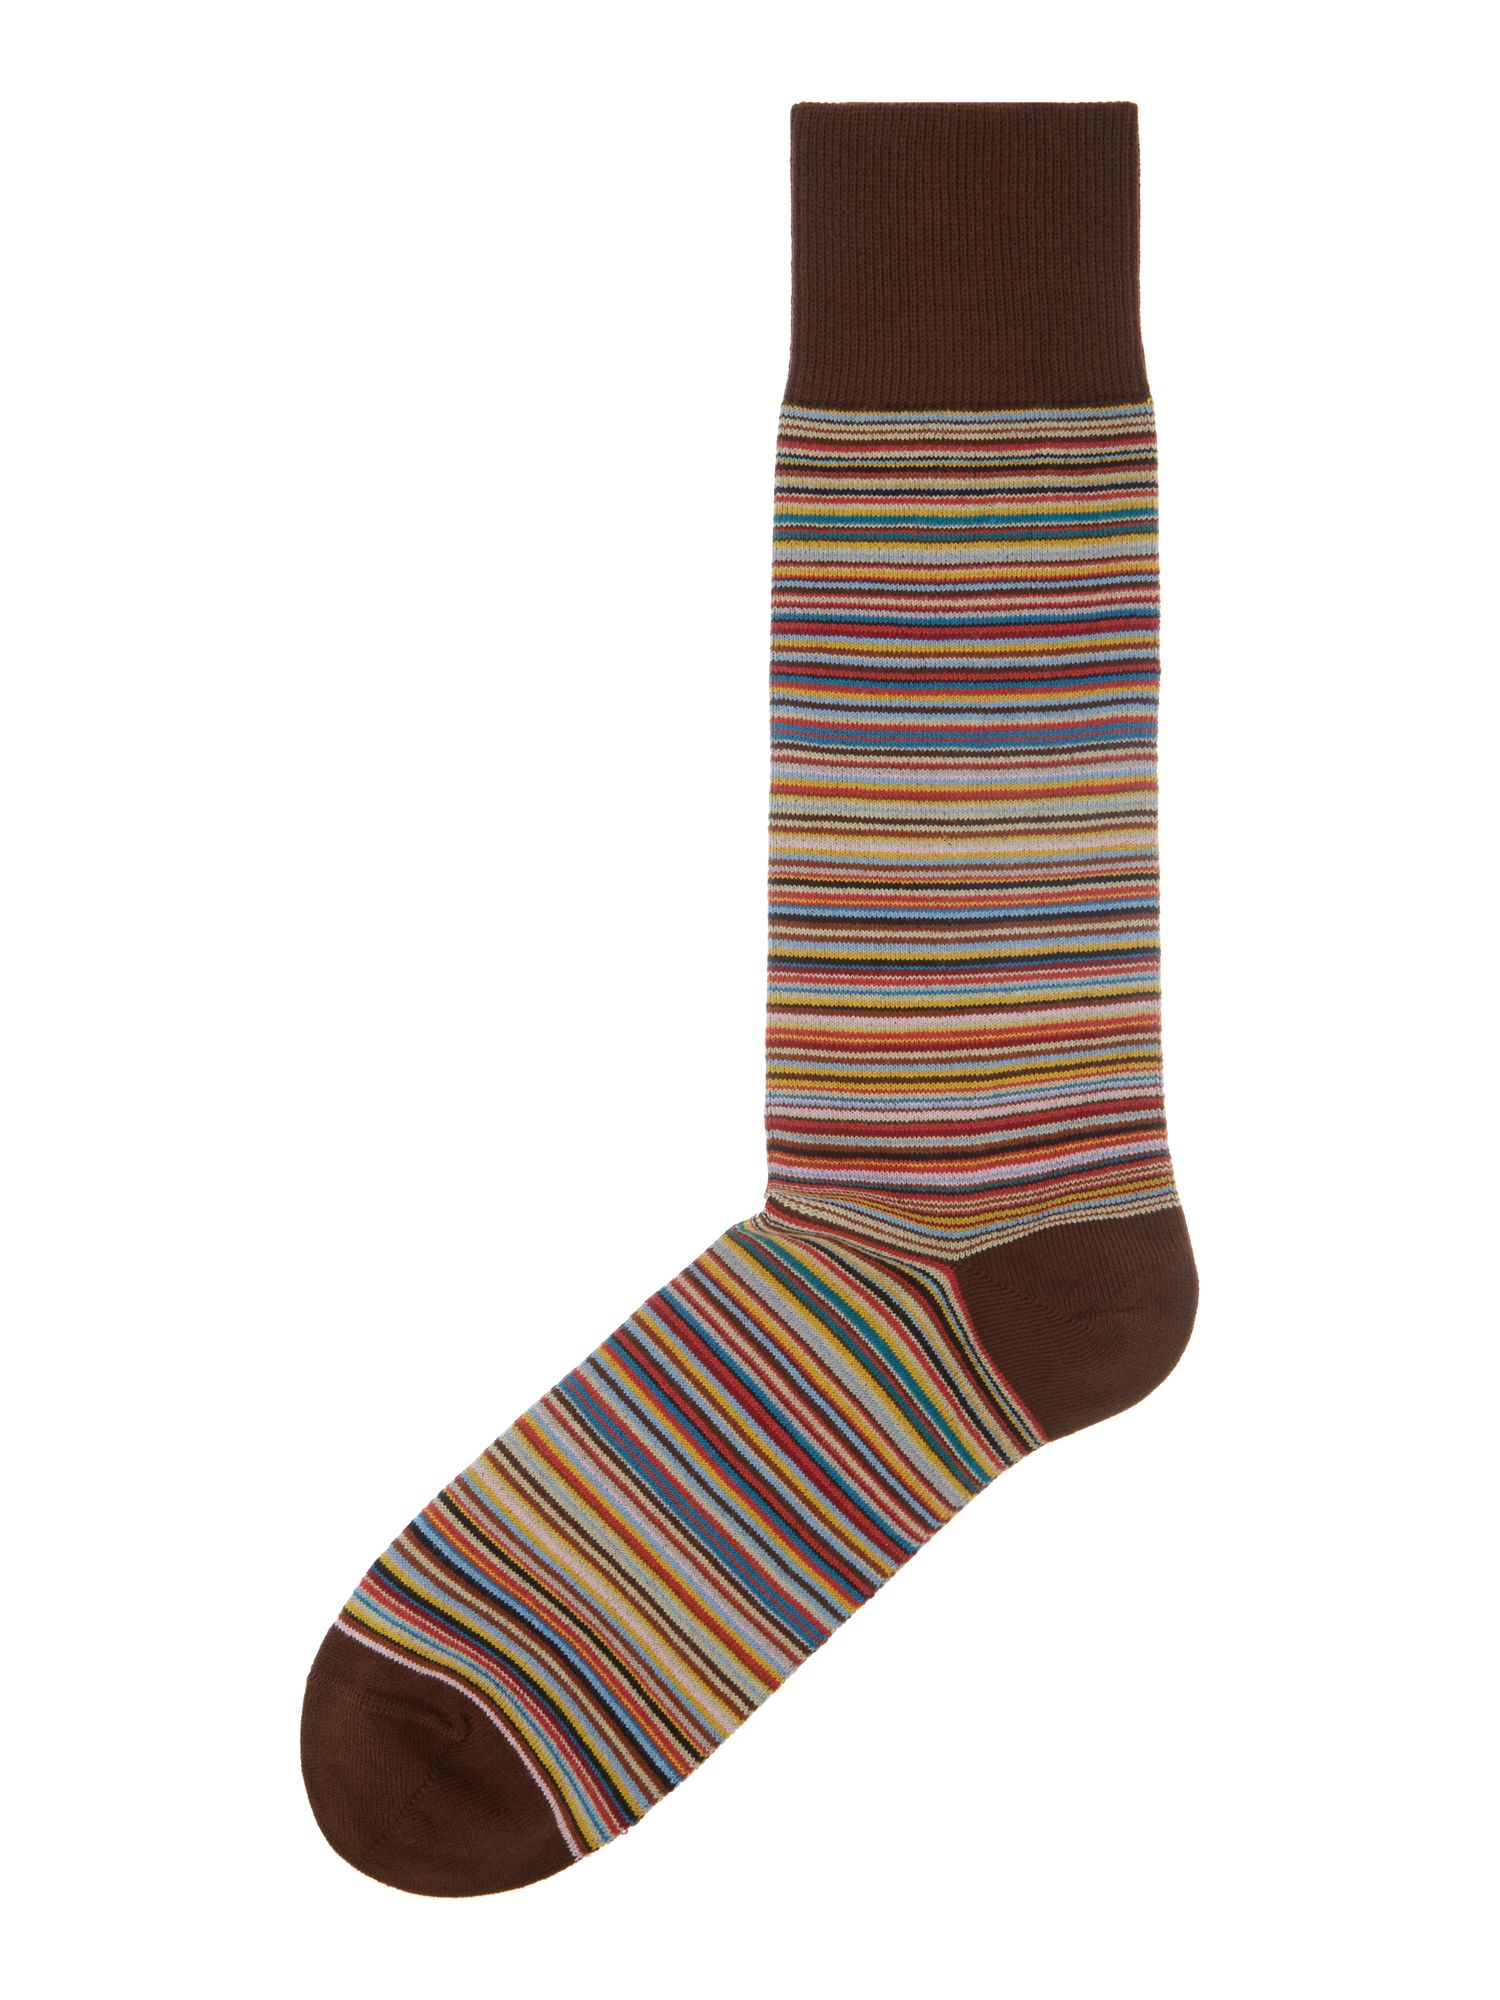 Paul smith Striped Cotton-blend Ankle Socks for Men | Lyst